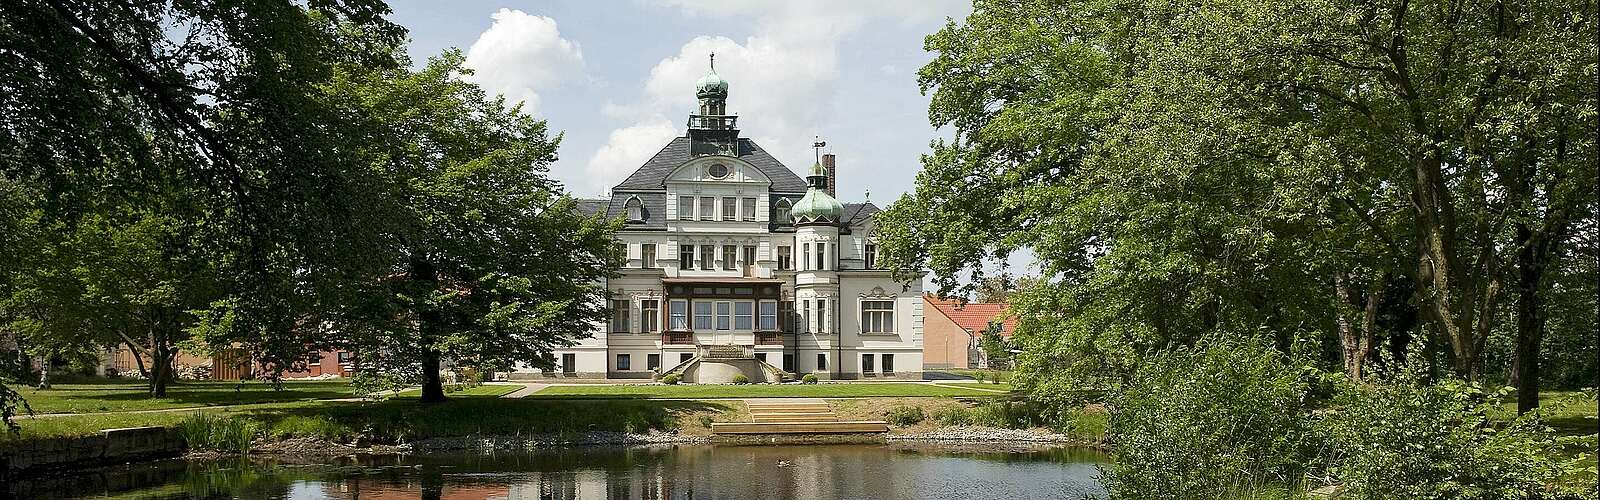 Schloss Uebigau,
        
    

        Foto: AG HIS/Erik-Jan Ouwerkerk